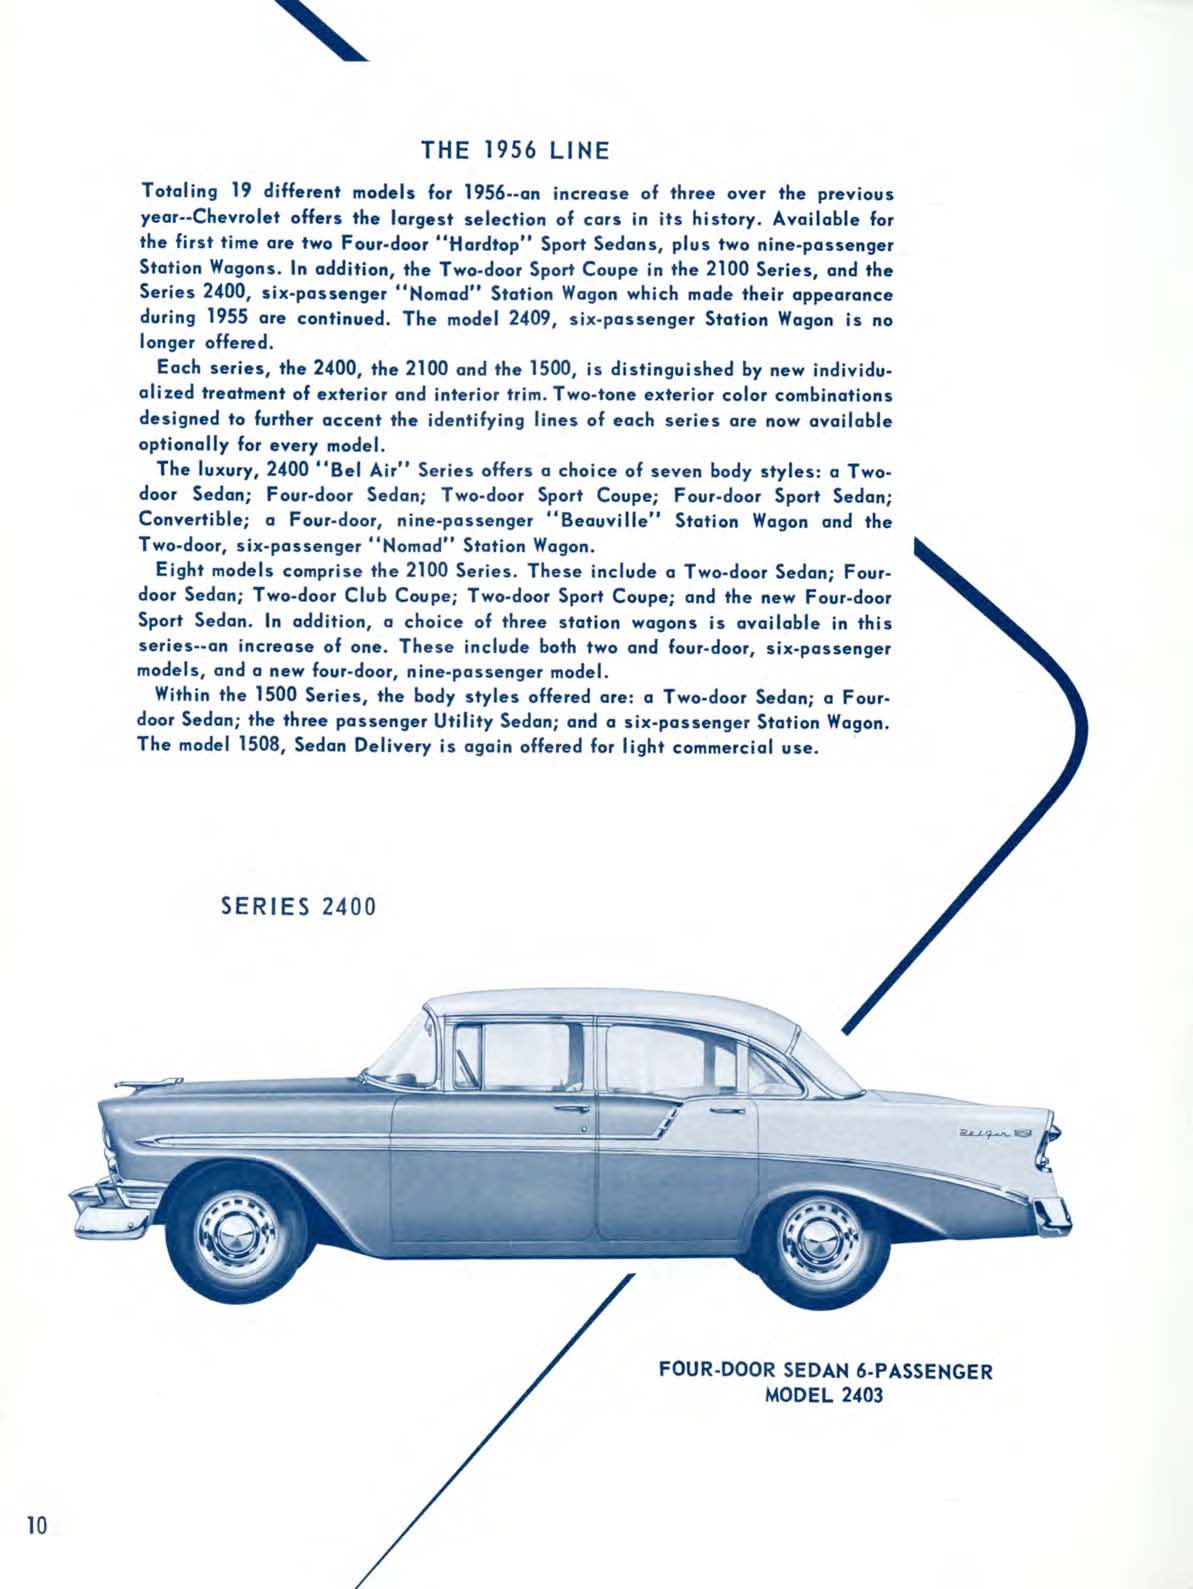 1956_Chevrolet_Engineering_Features-10